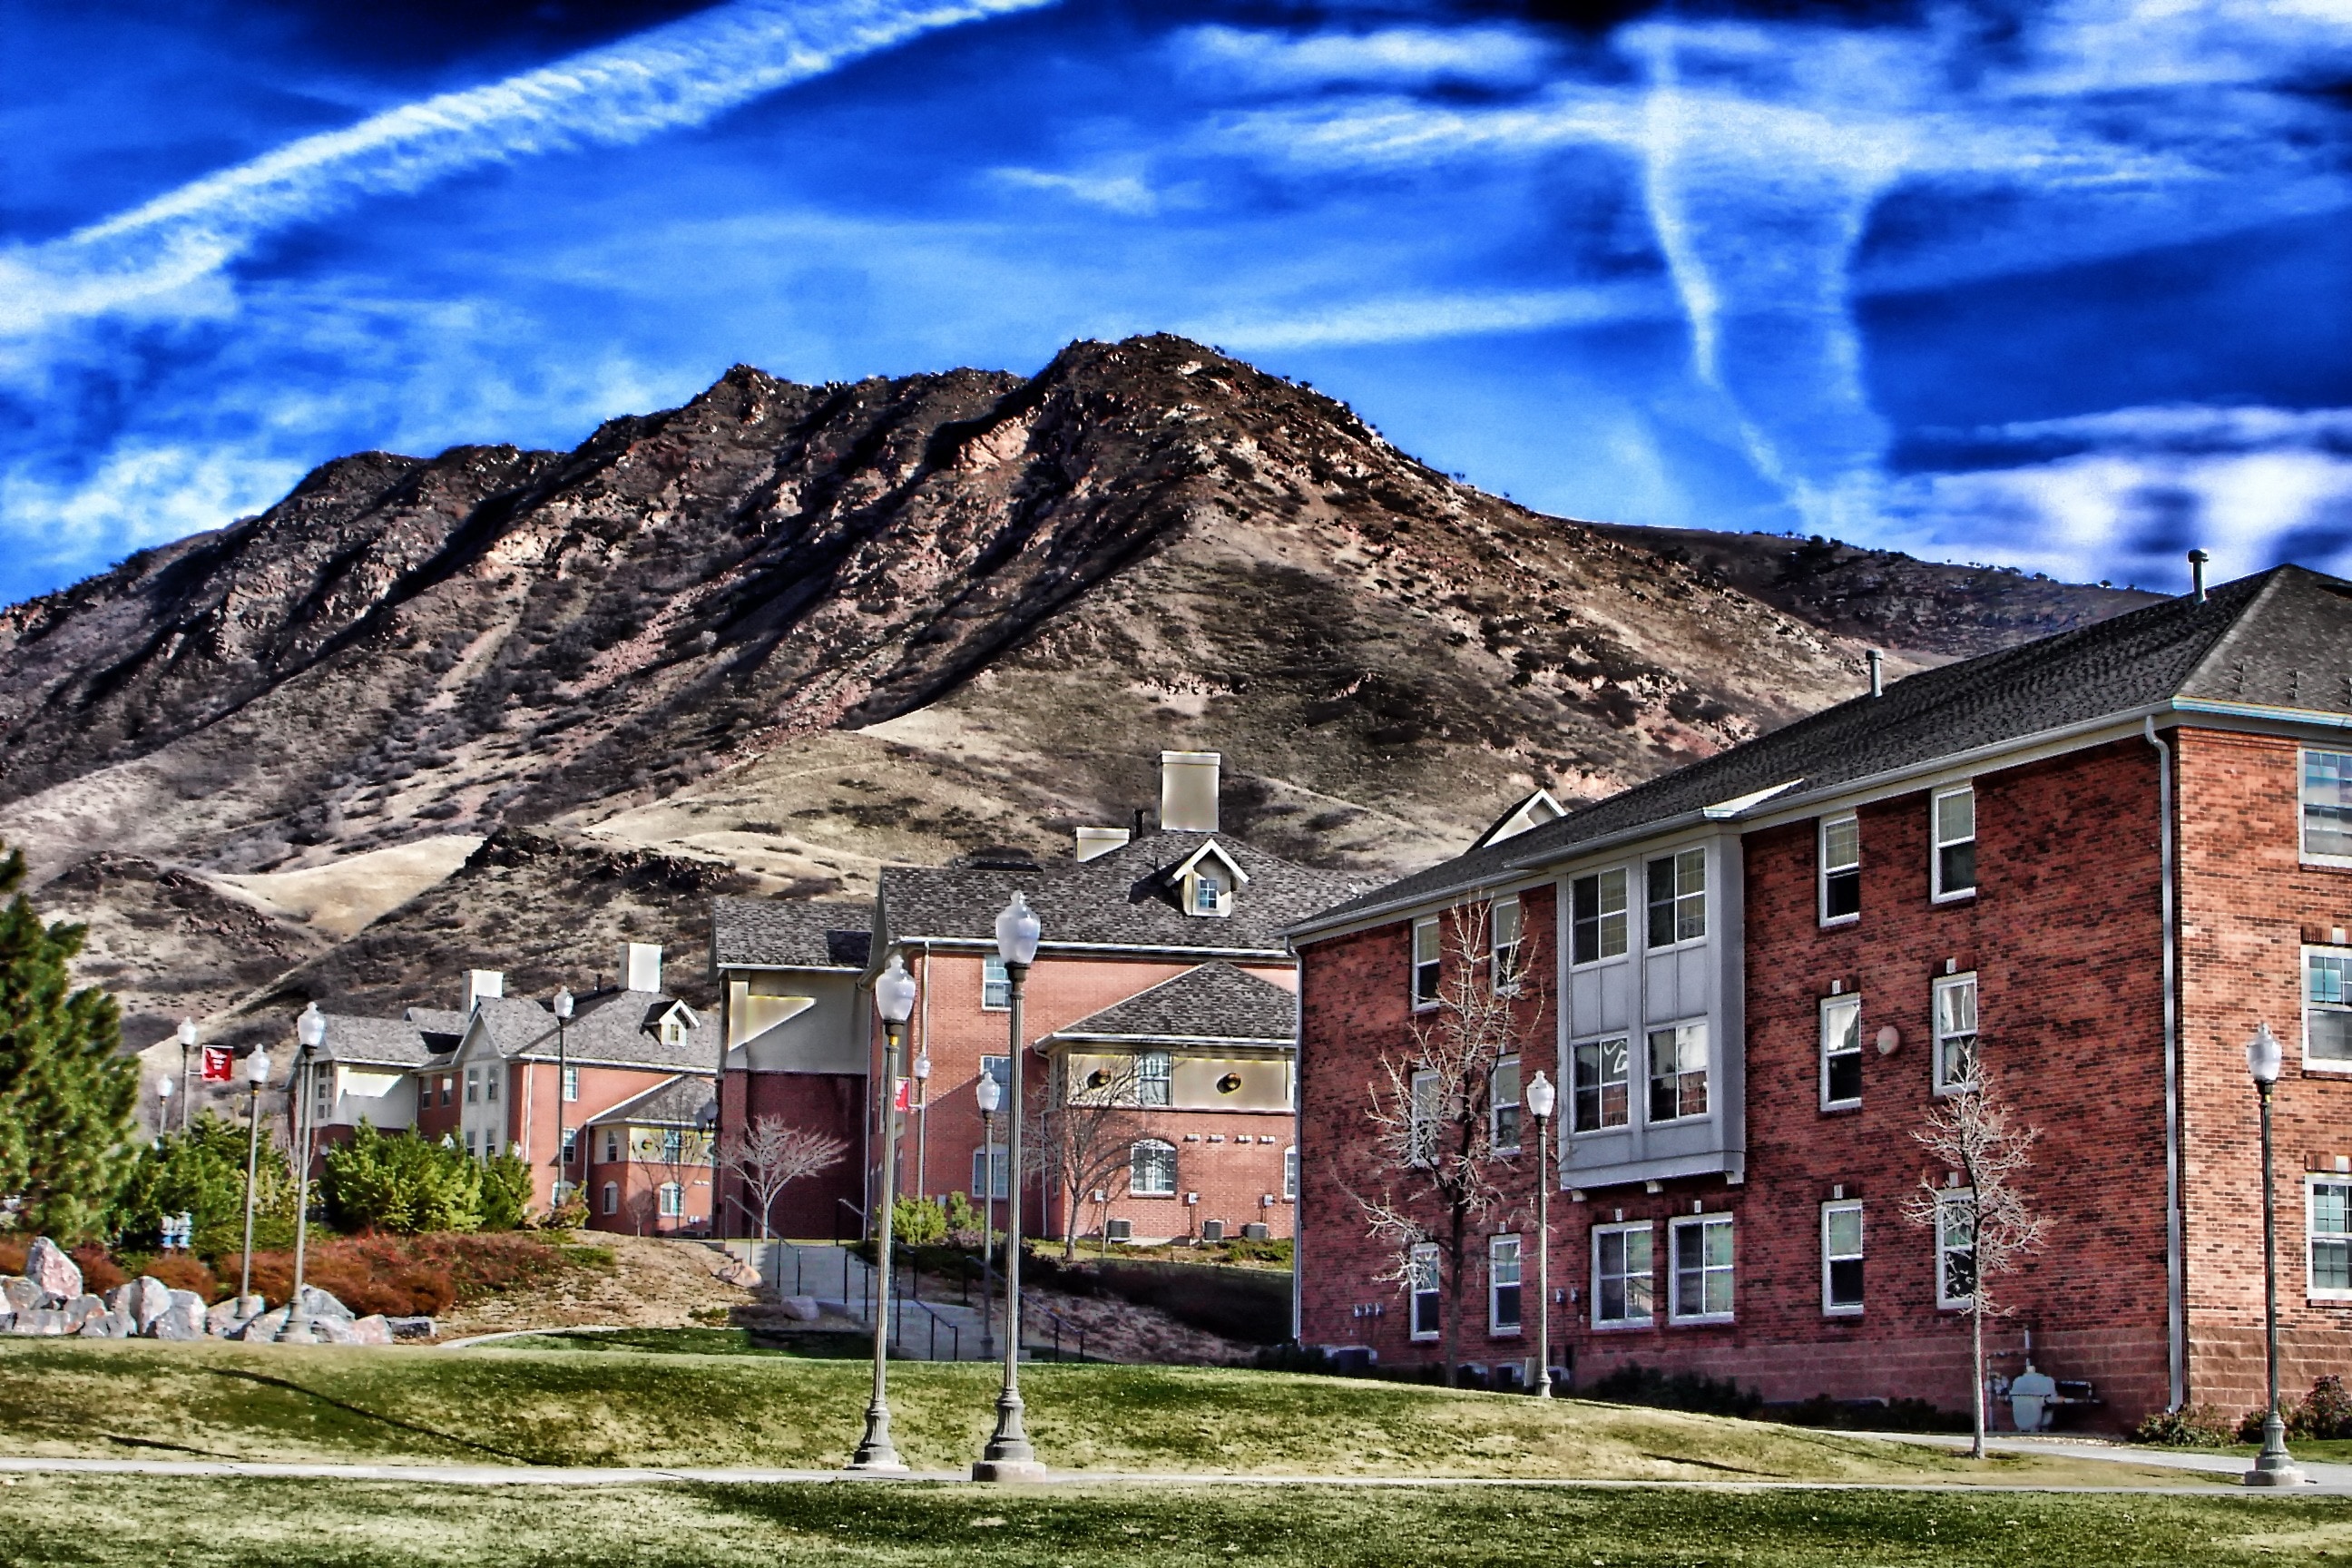 Salt Lake City, University, Utah, building exterior, house